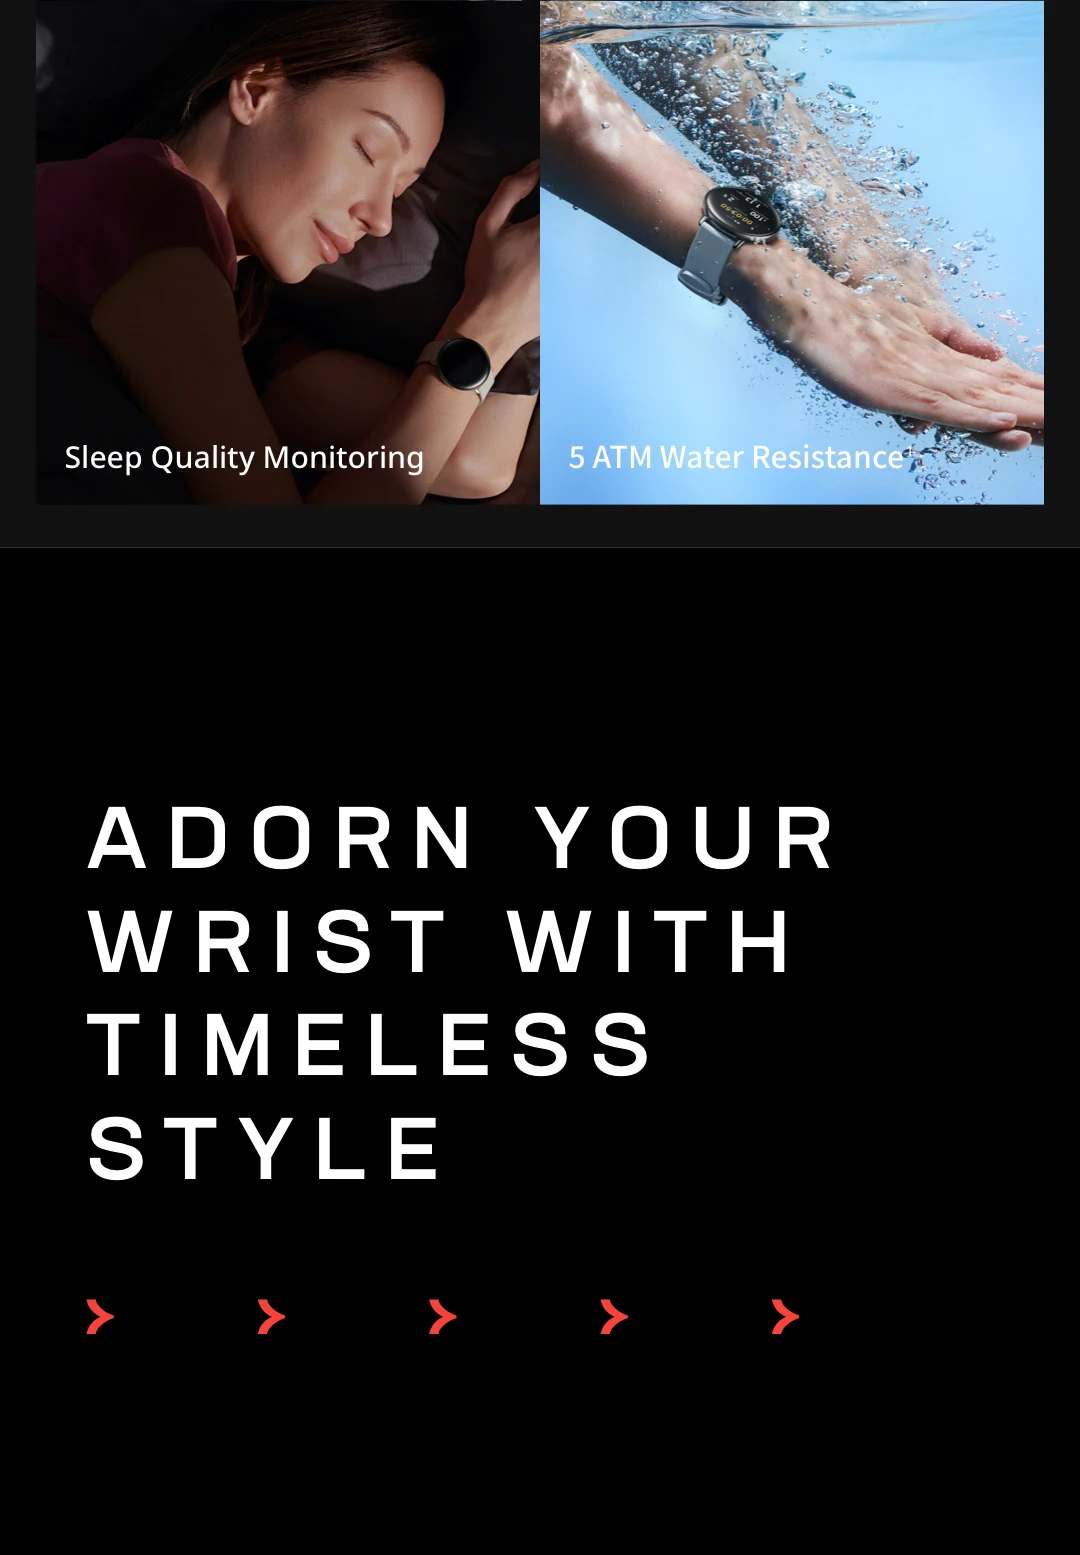 Zepp E Circle 3D Design Health & Activity Tracking Smartwatch